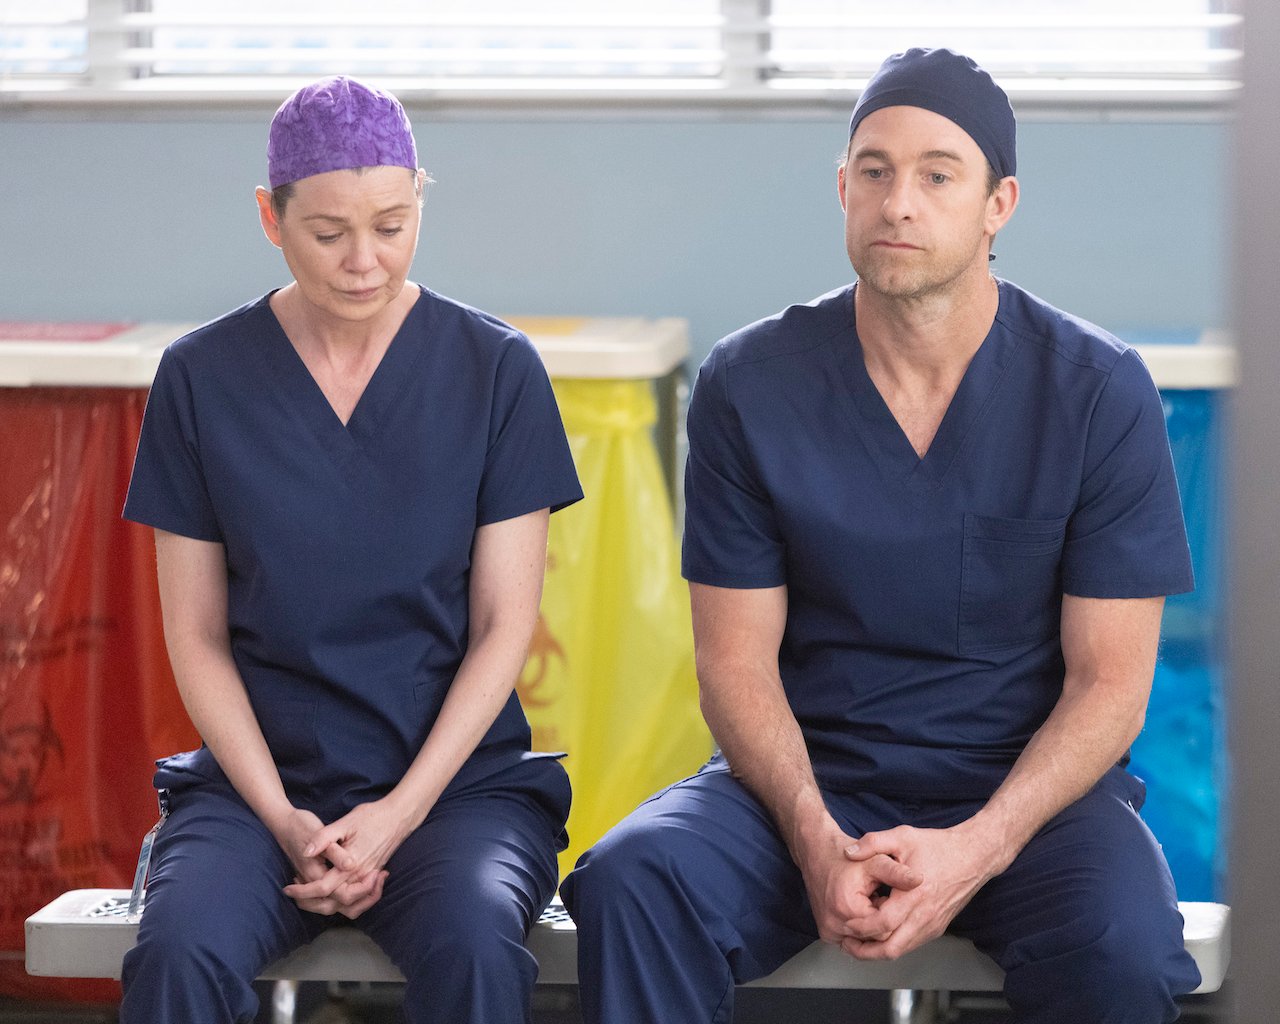 Ellen Pompeo as Meredith Grey and Scott Speedman as Nick Marsh sit next to each other in blue scrubs on 'Grey's Anatomy'.